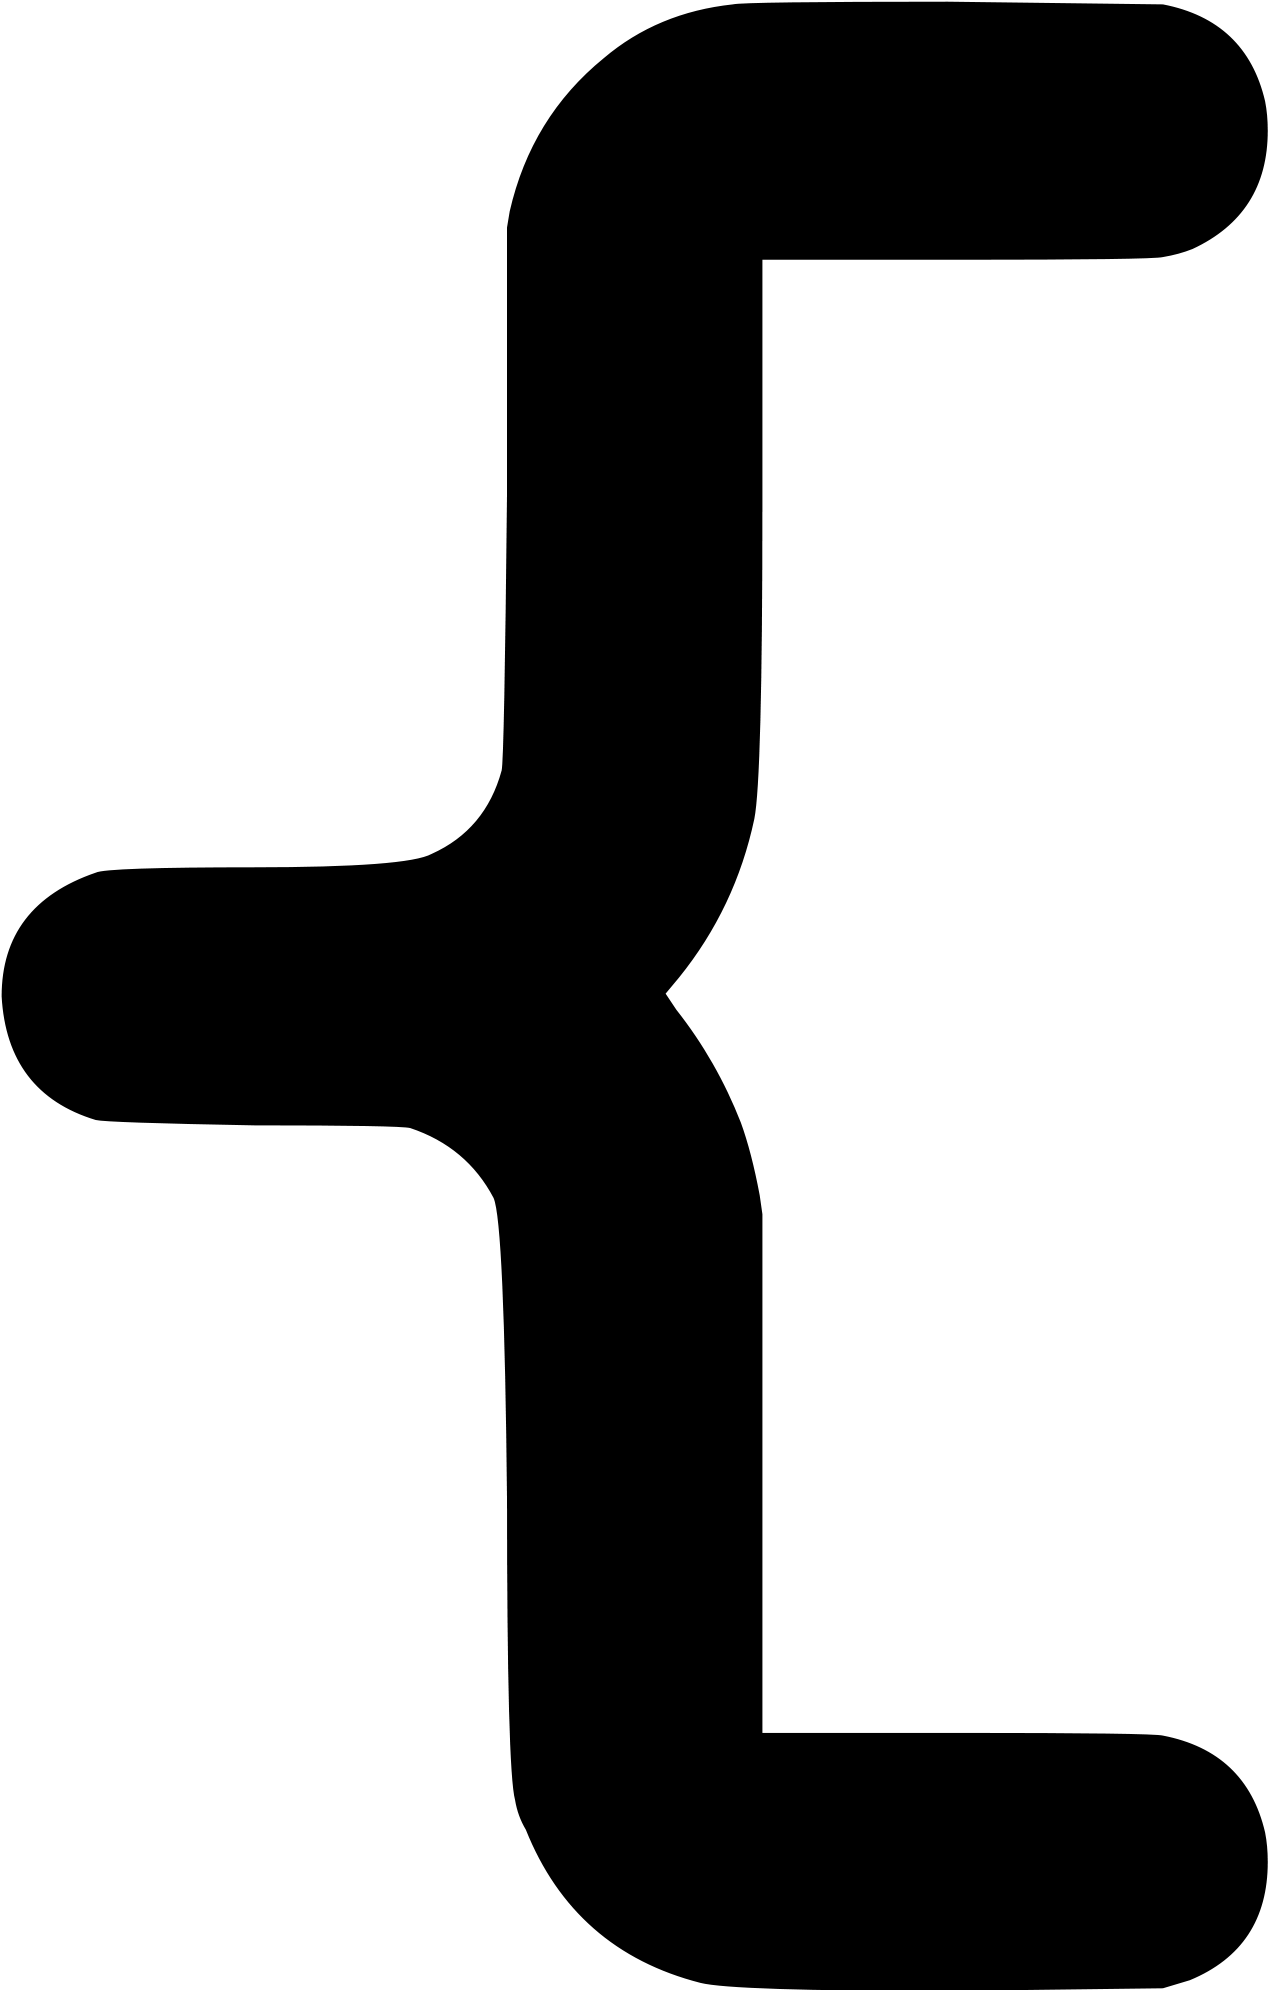 Open - Bracket Character (2000x2828)